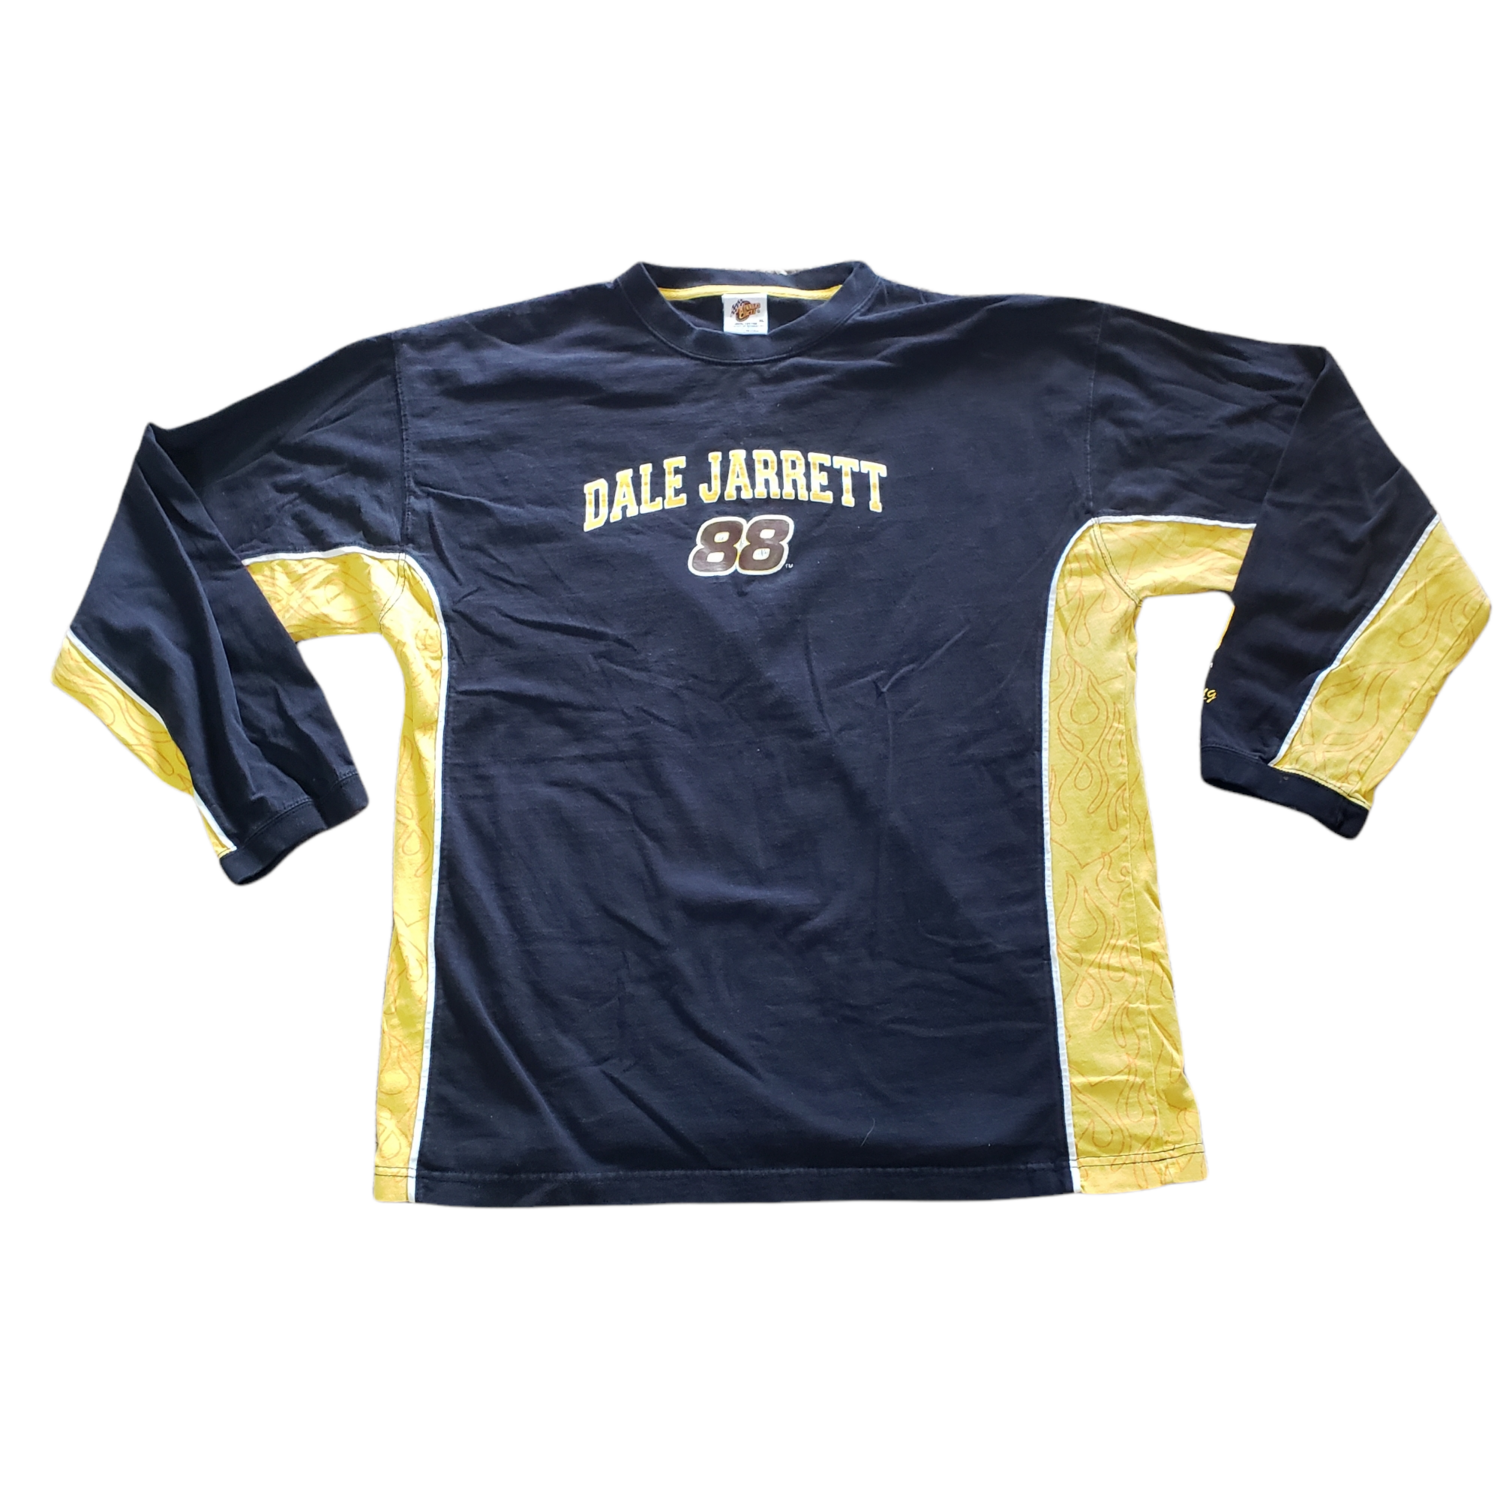 Dale Jarrett Shirt Vintage NASCAR Racing Winners Circle Flames Long Sleeve XL